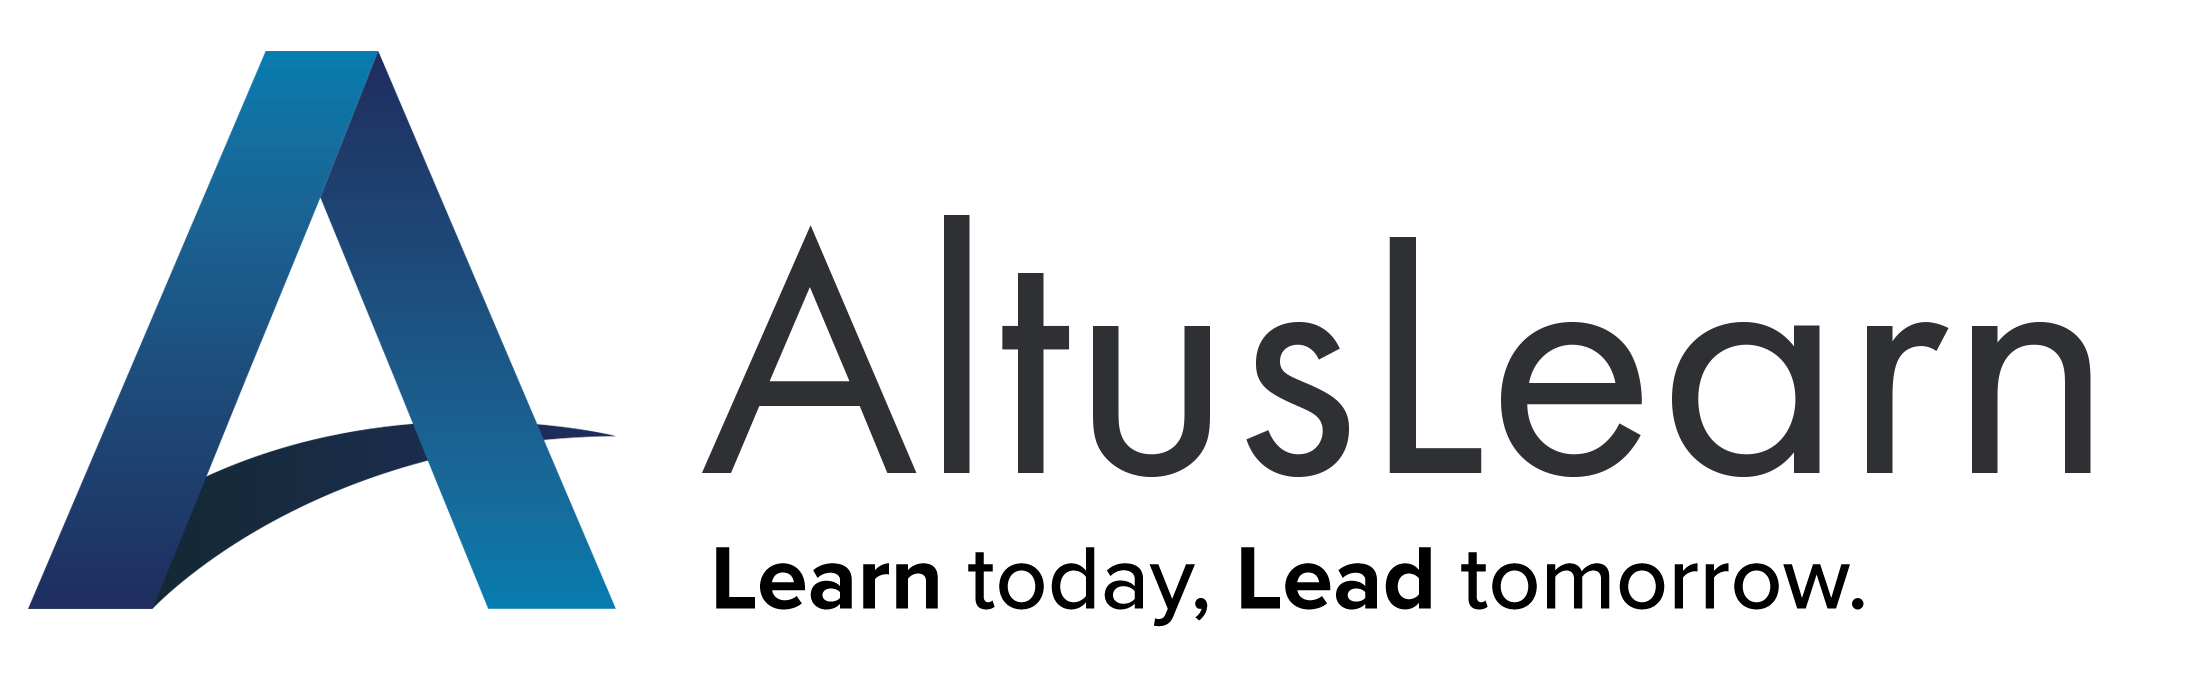 AltusLearn Logos2.png